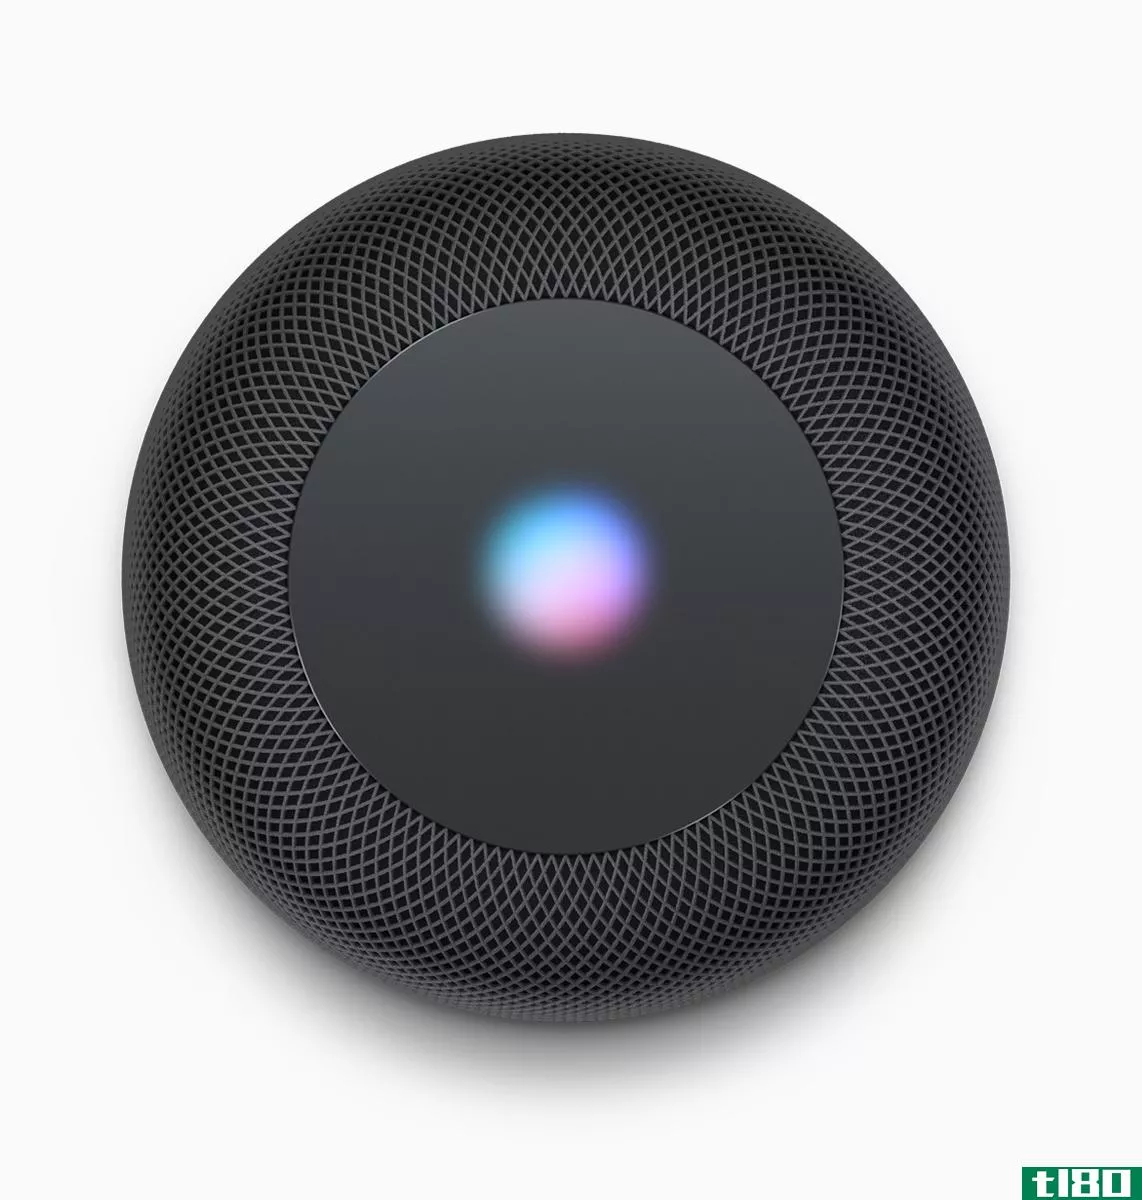 苹果宣布homepod speaker将与sonos竞争